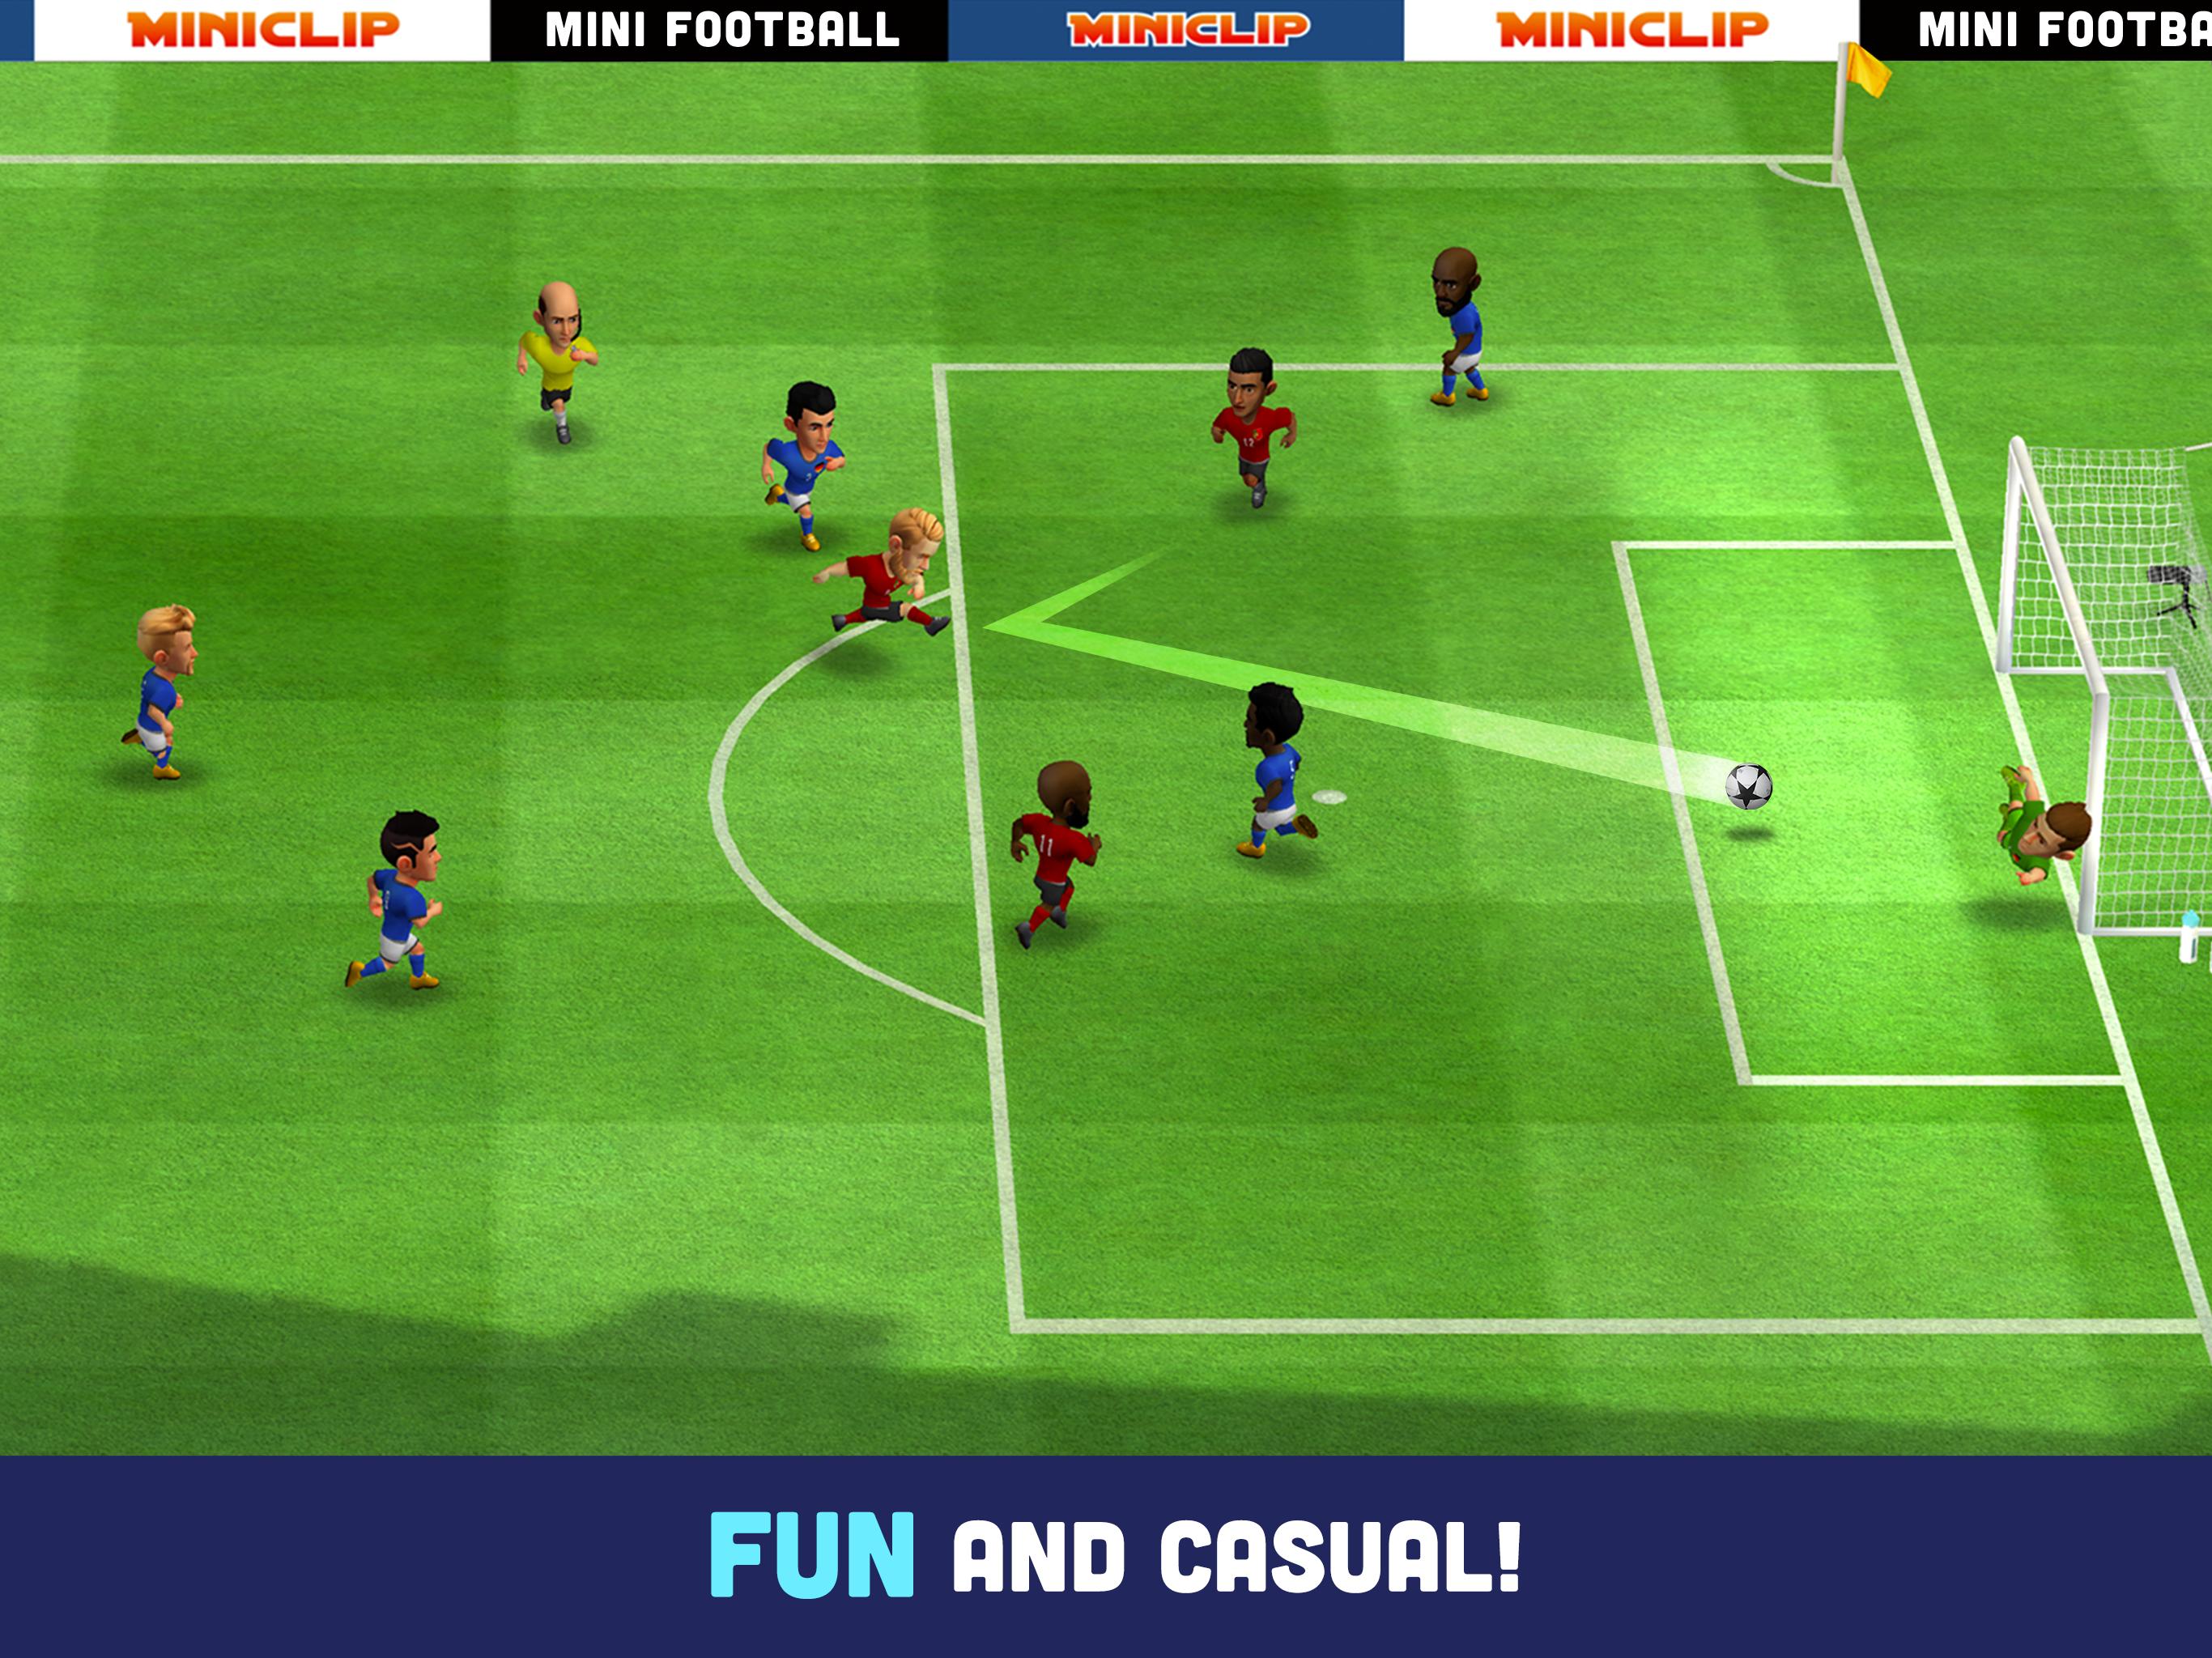 Mini Football Mobile Soccer 1.1.0 Screenshot 15